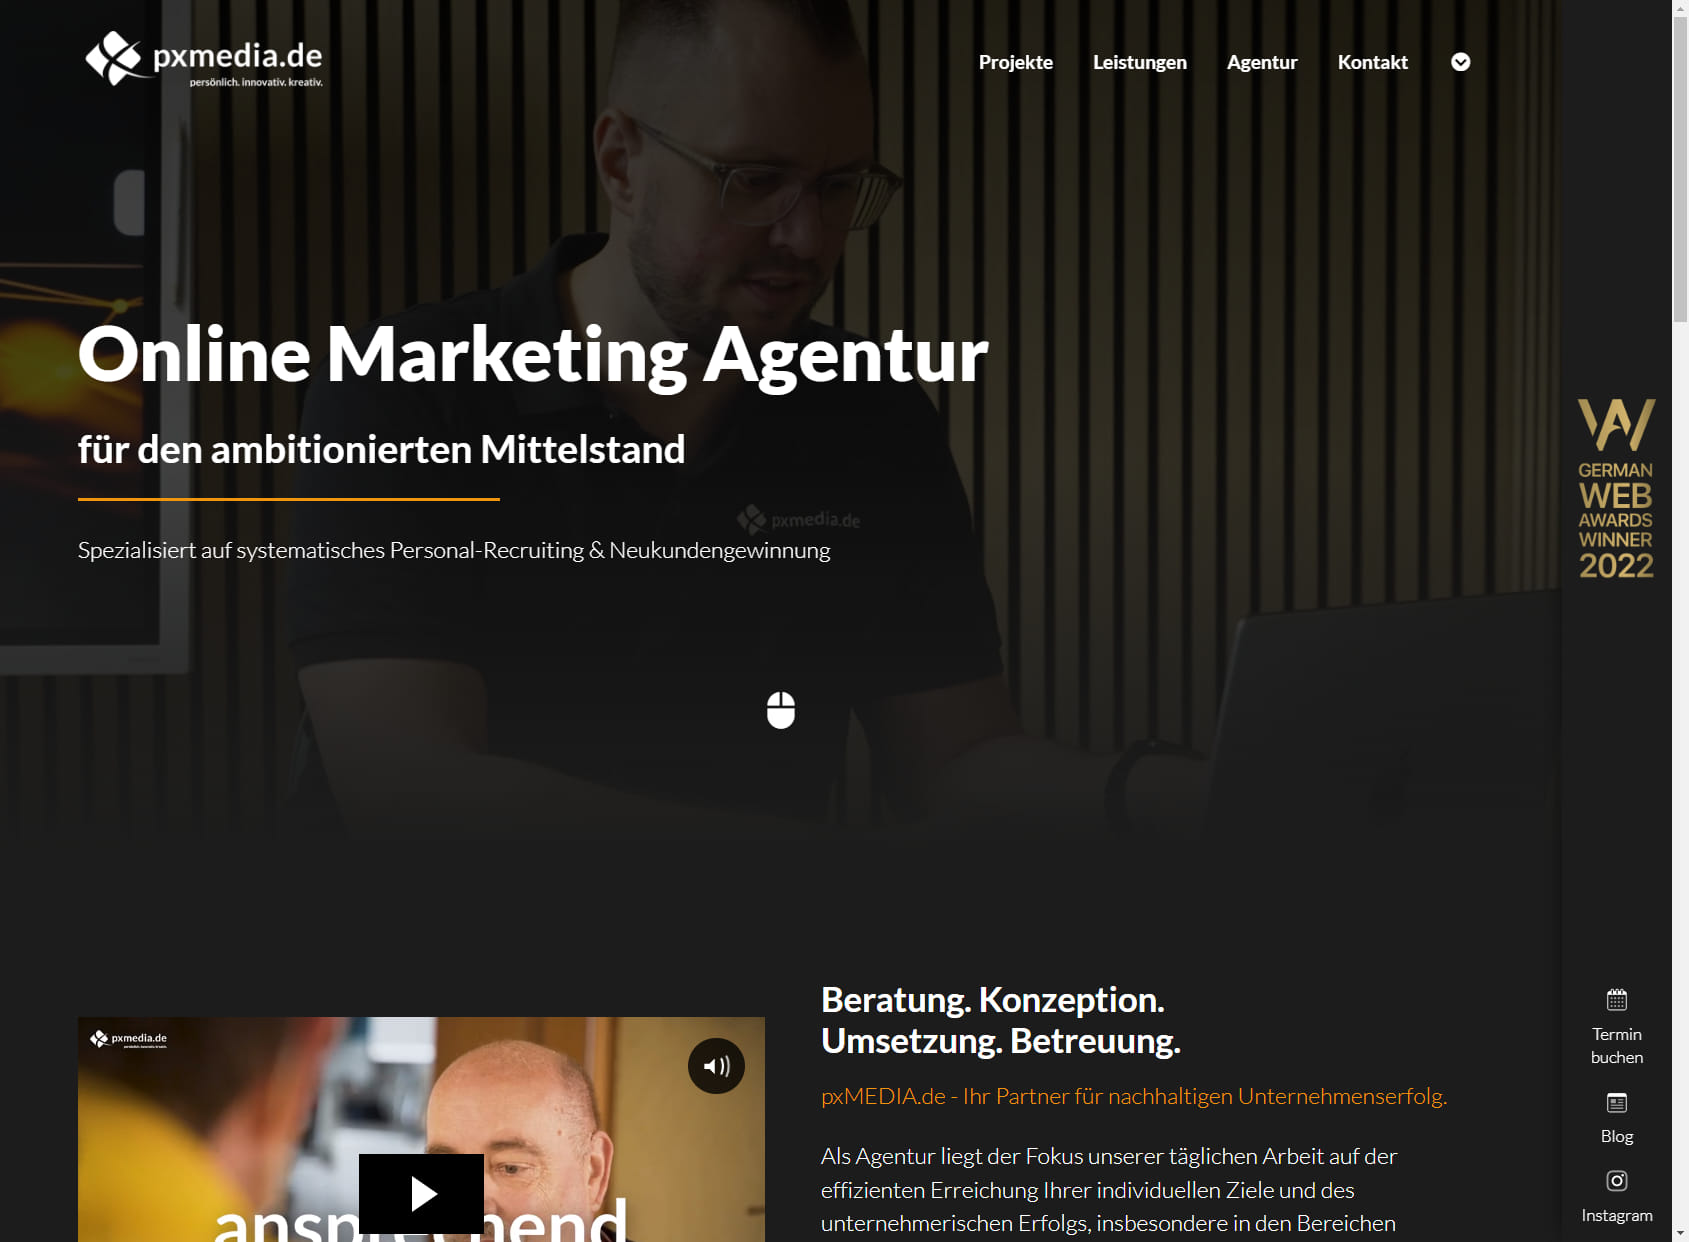 pxmedia.de GmbH | Digital & Marketing Agentur